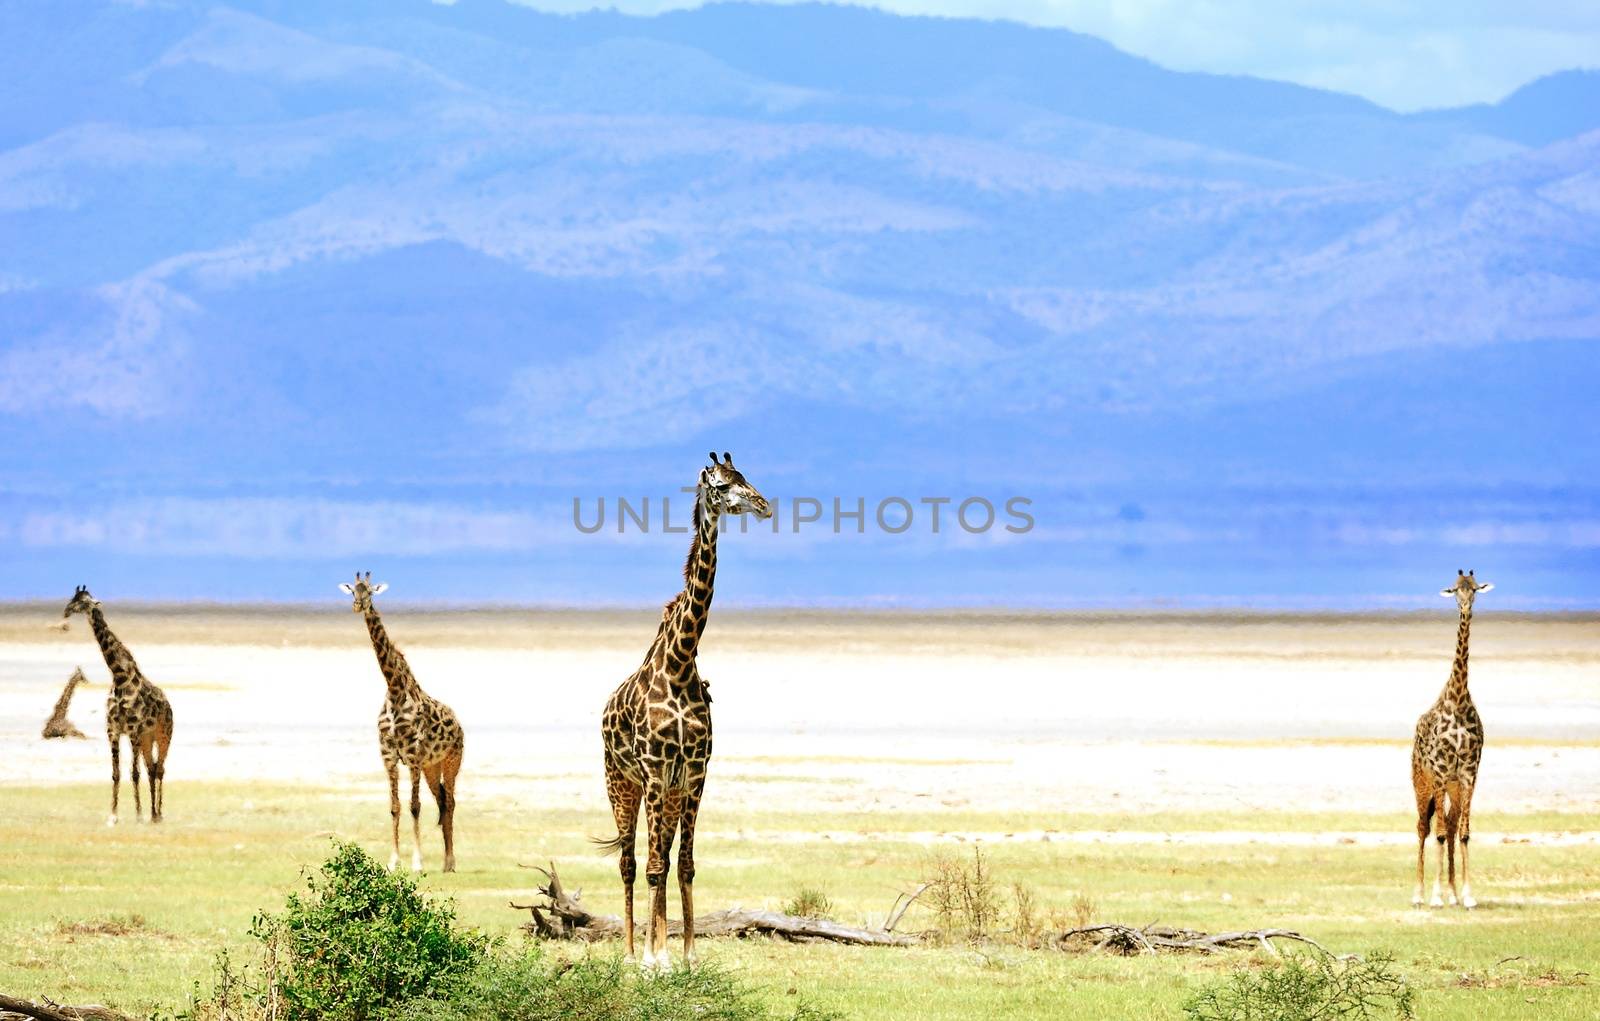 giraffe in tanzanian national park by moizhusein